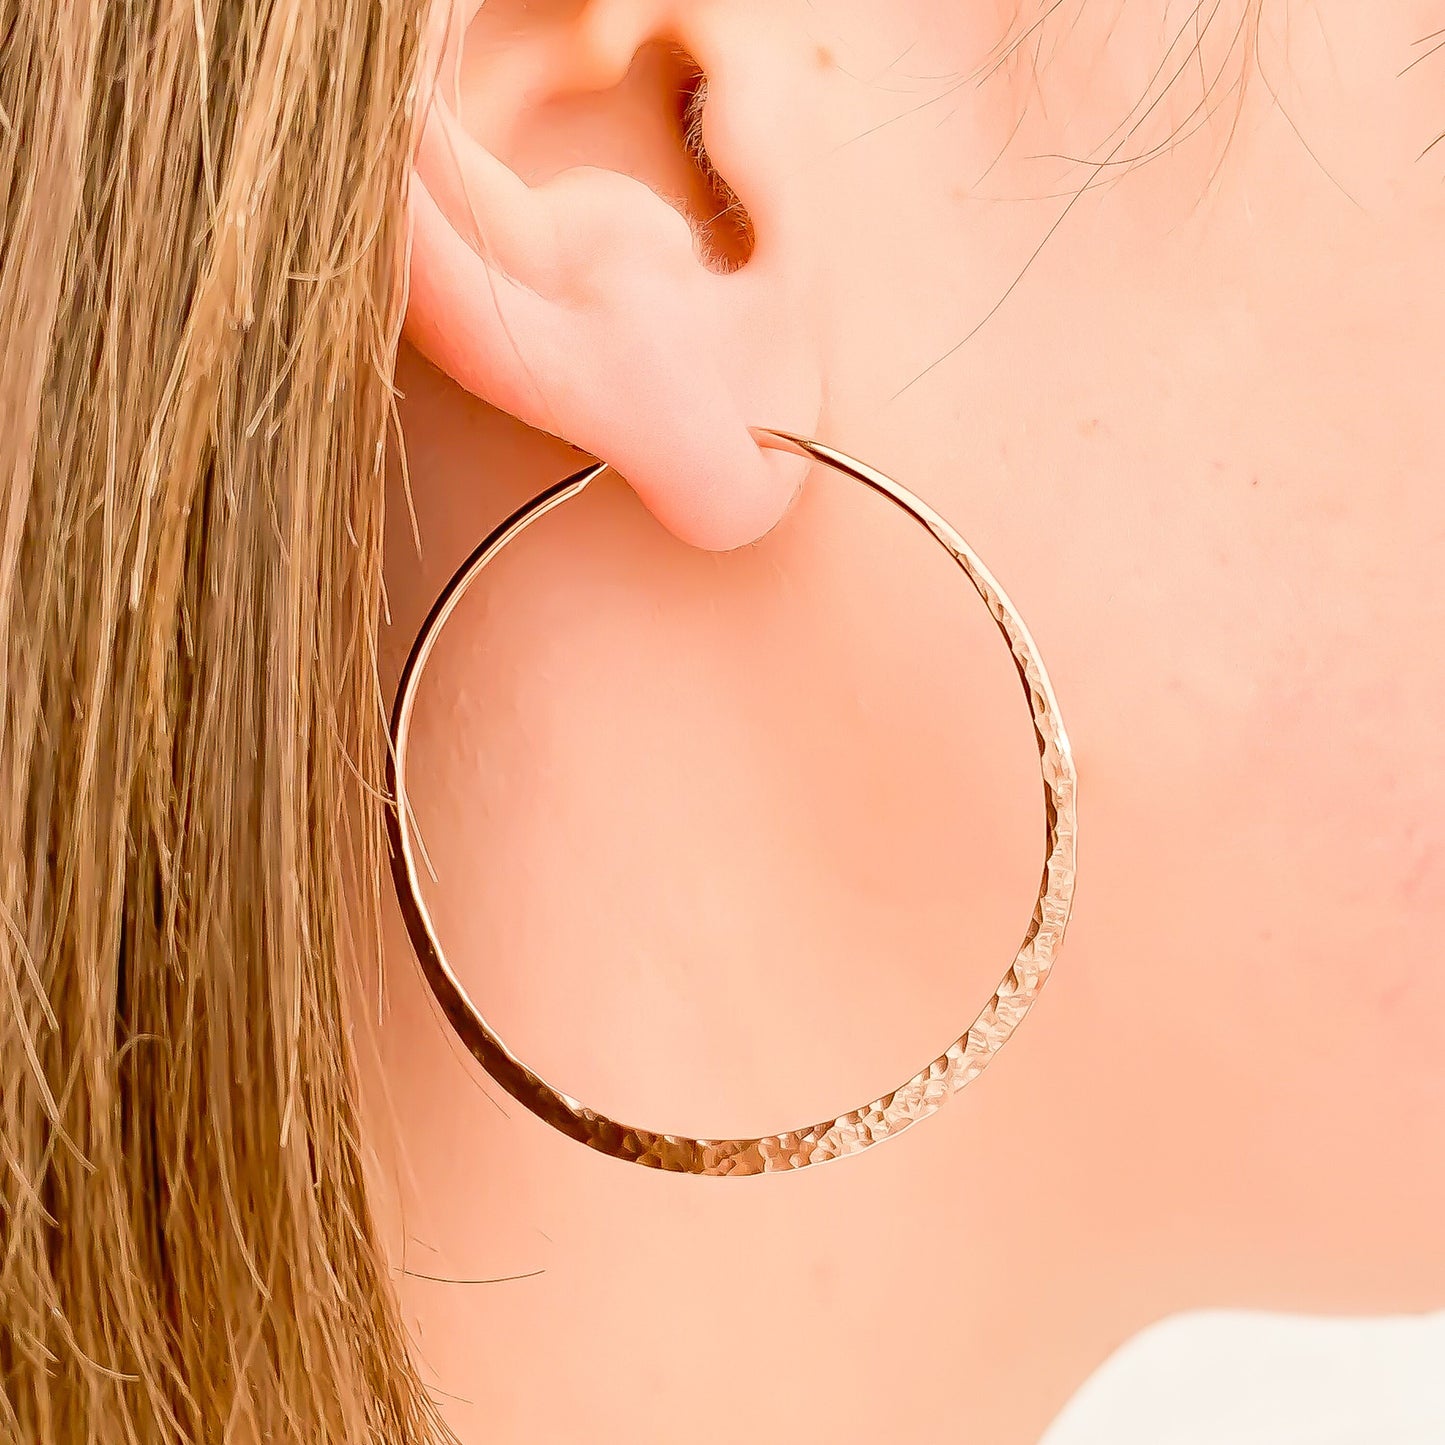 45mm Hammered Hoop Earrings, 14K Rose Gold Filled